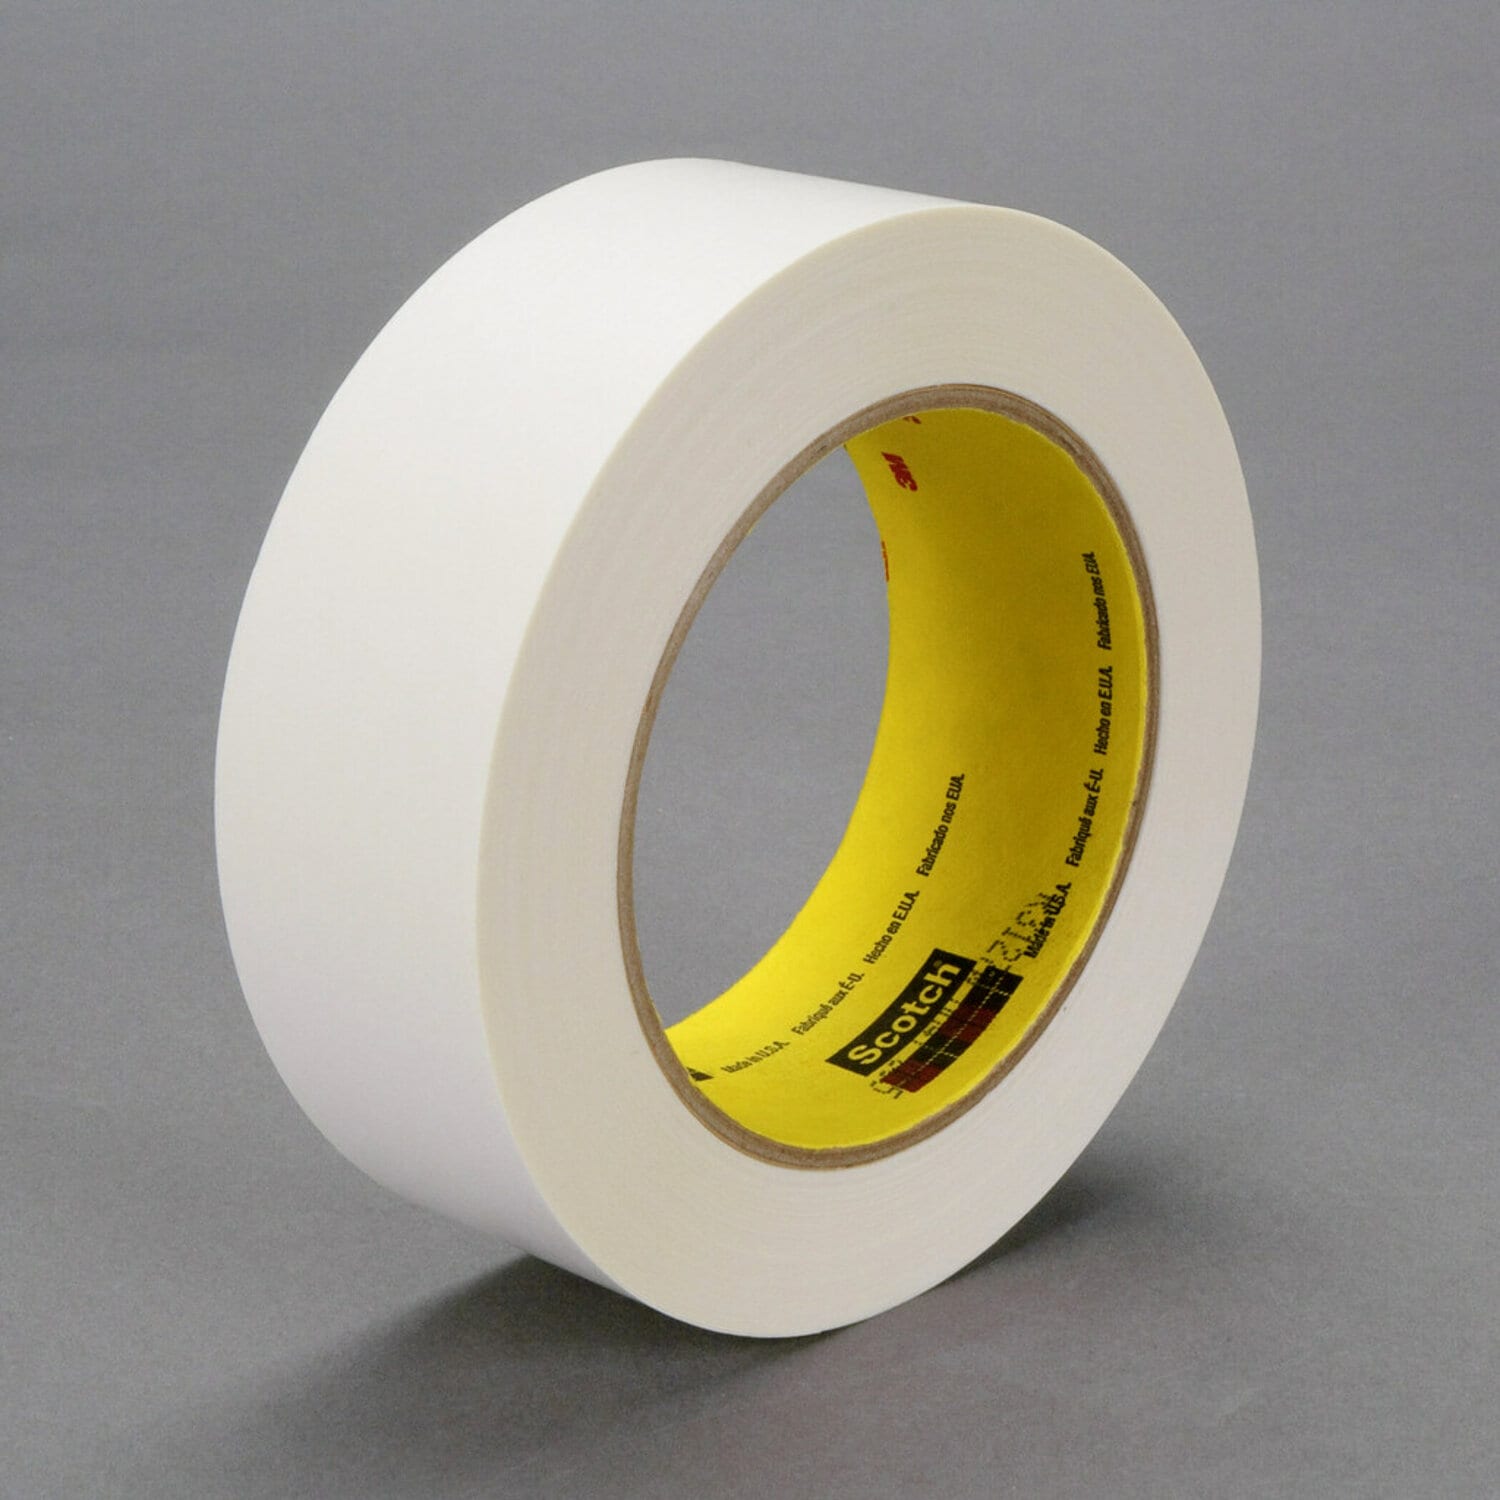 7100027855 - 3M Repulpable Flatback Tape R3127, White, 36 mm x 55 m, 4.2 mil, 24
rolls per case